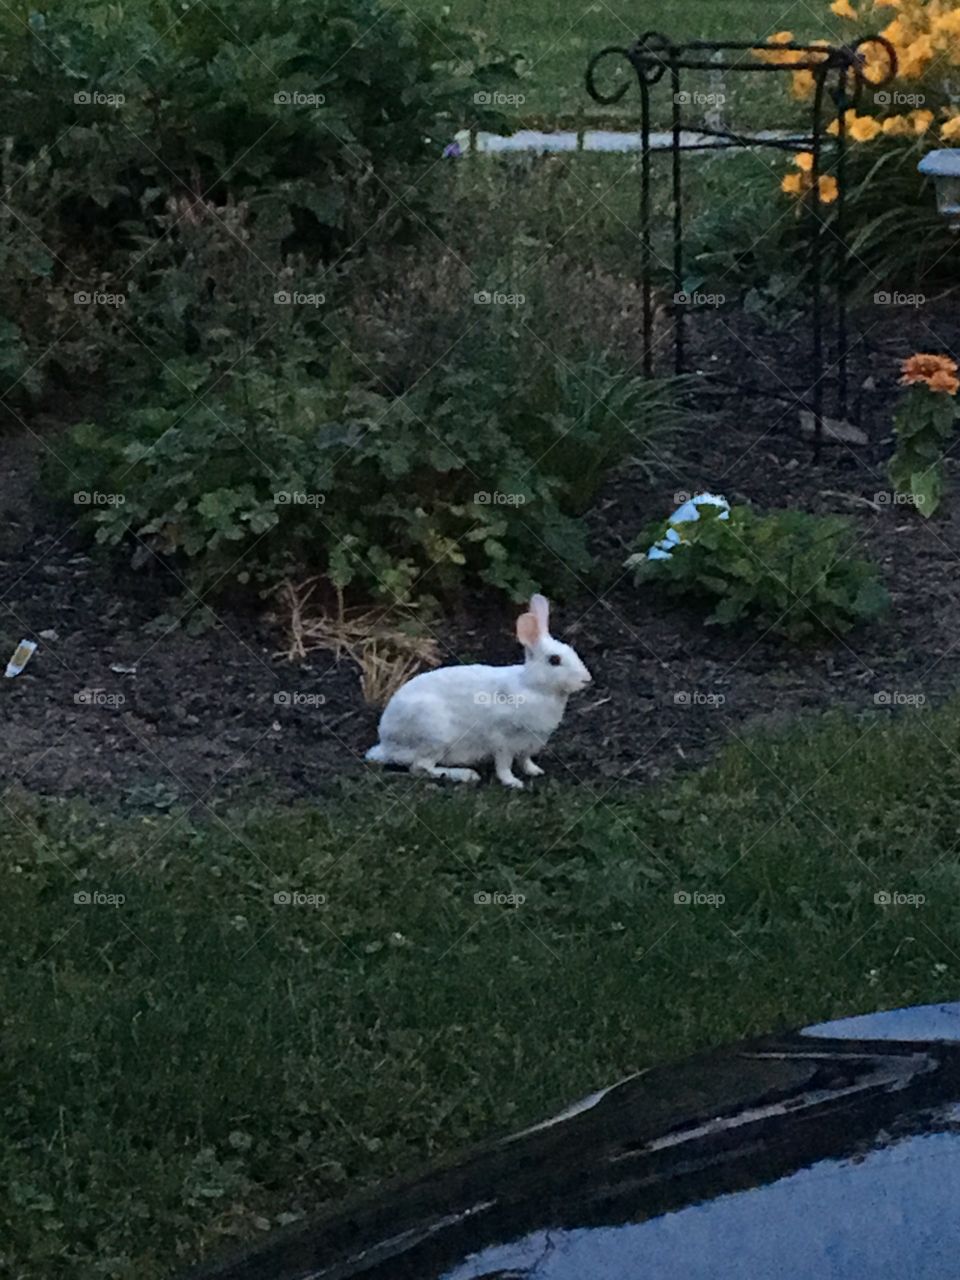 Magician's White Rabbit